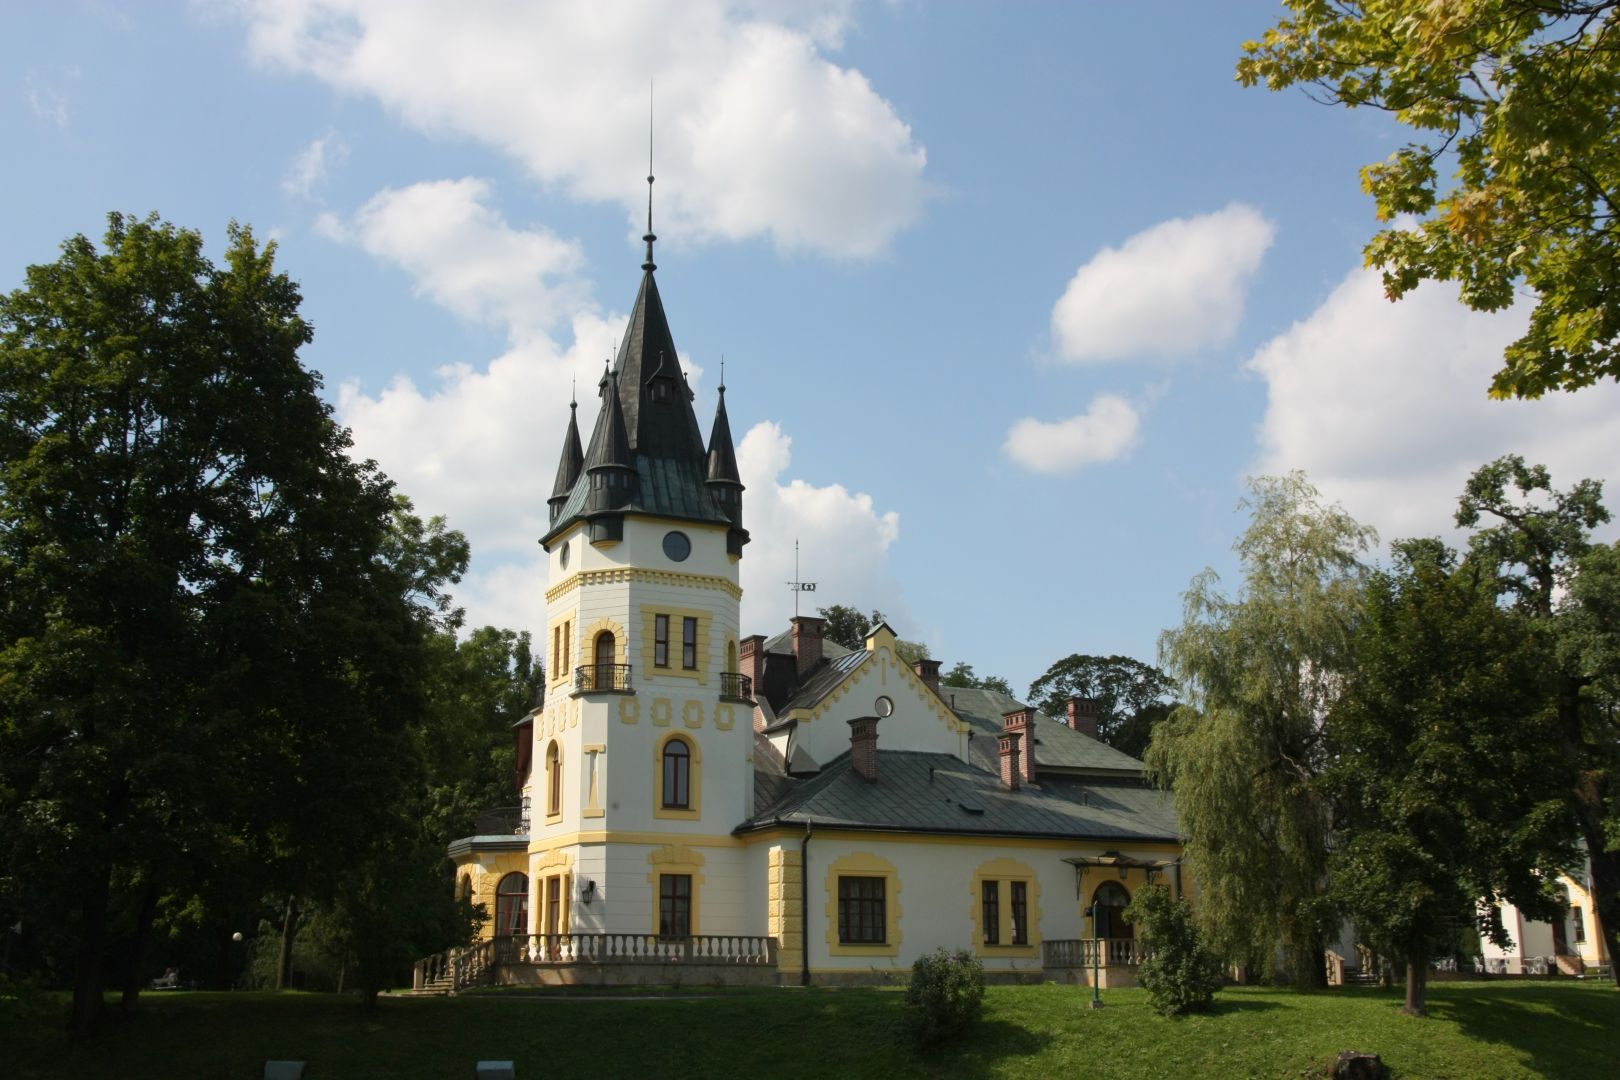 Palace in Olszanica